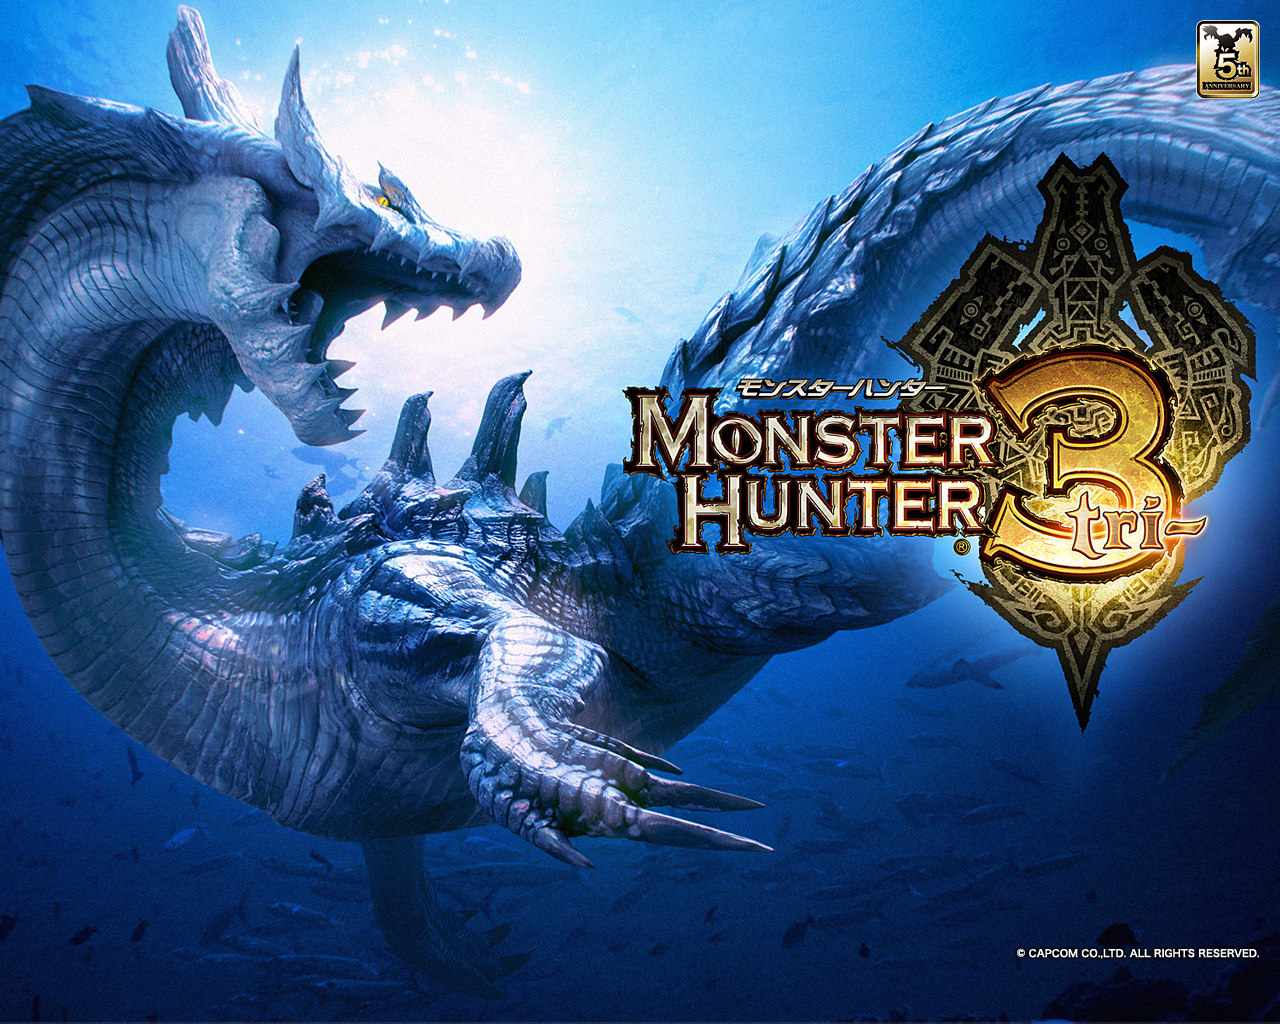 Monster Hunter Tri Fiche Rpg Res Pres Wallpaper Videos